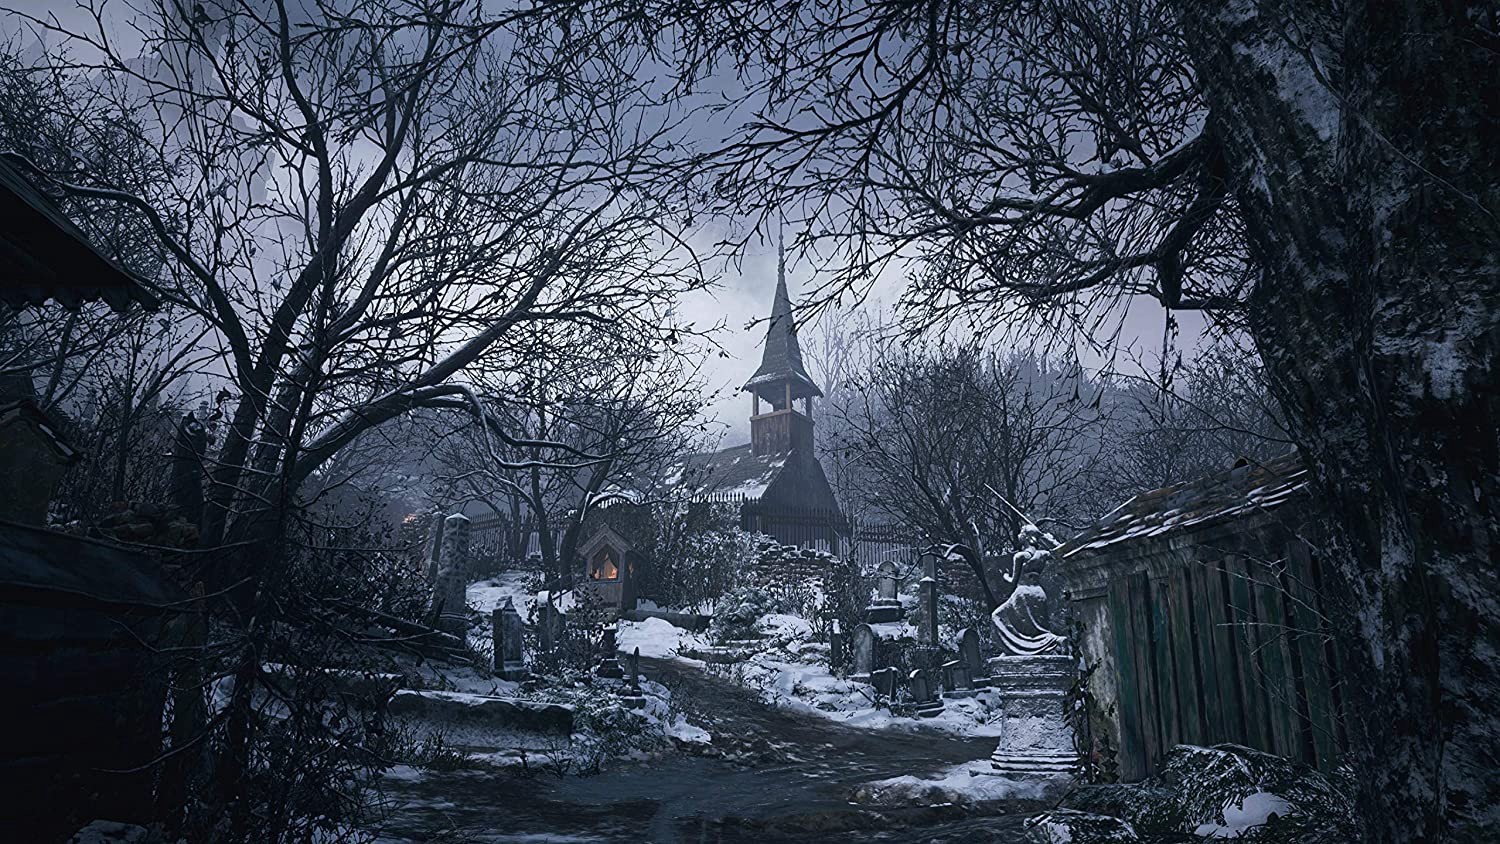 Resident Evil 8: Resident Evil Village, PlayStation 4